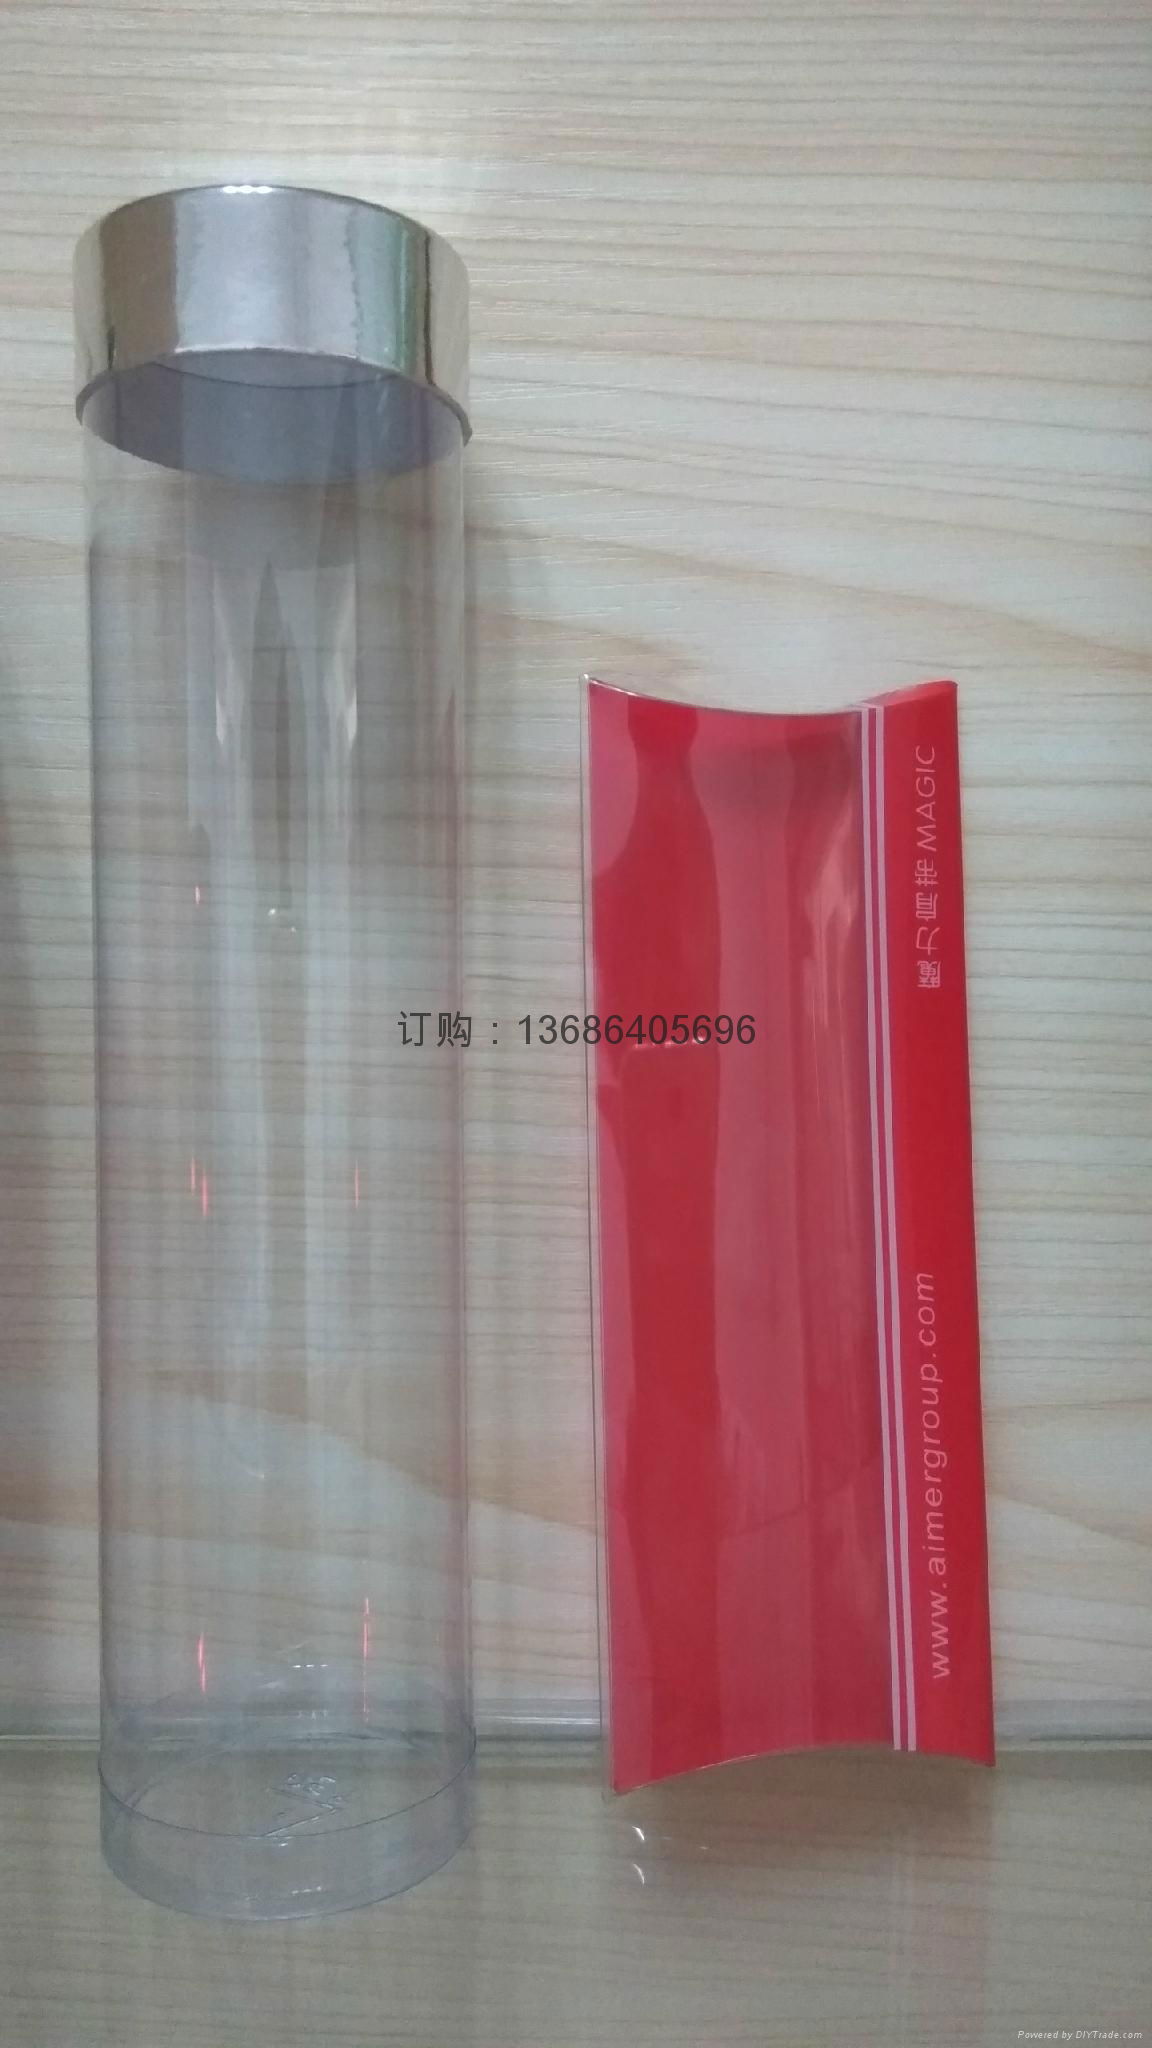 Shenzhen blister packaging